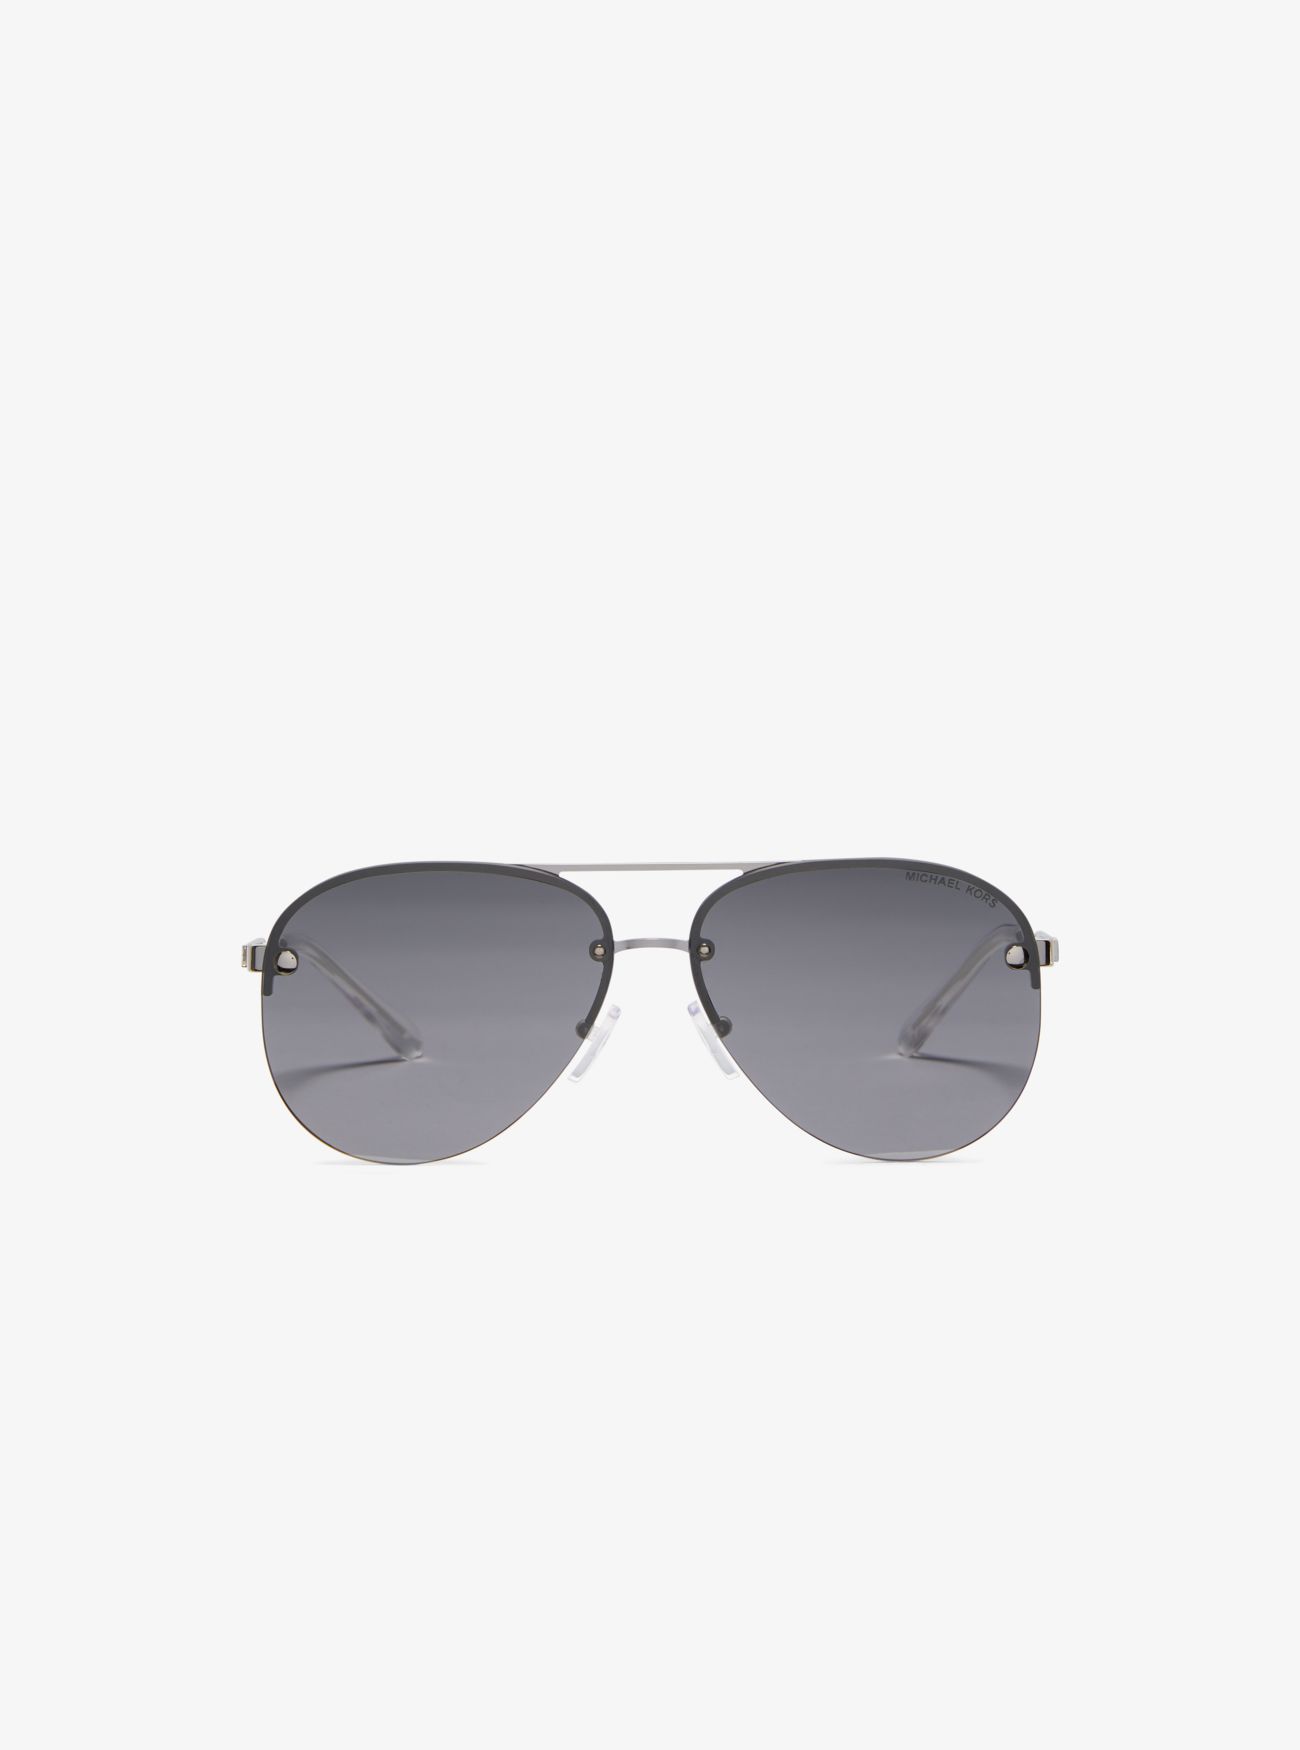 MK East Side Sunglasses - Grey - Michael Kors